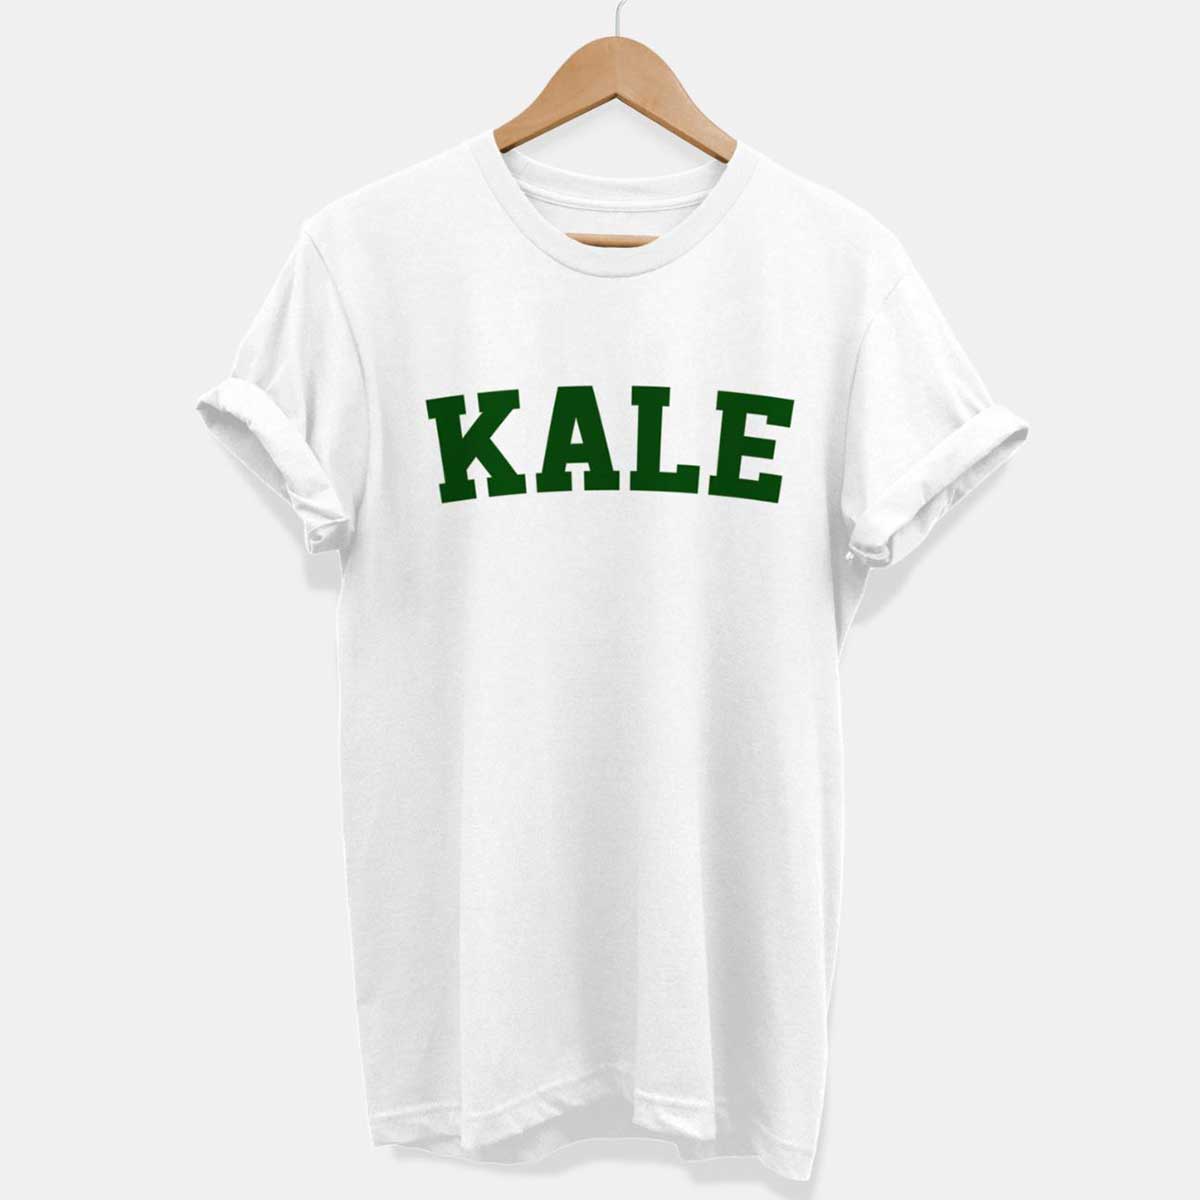 Kale Ethical Vegan T-Shirt (Unisex)